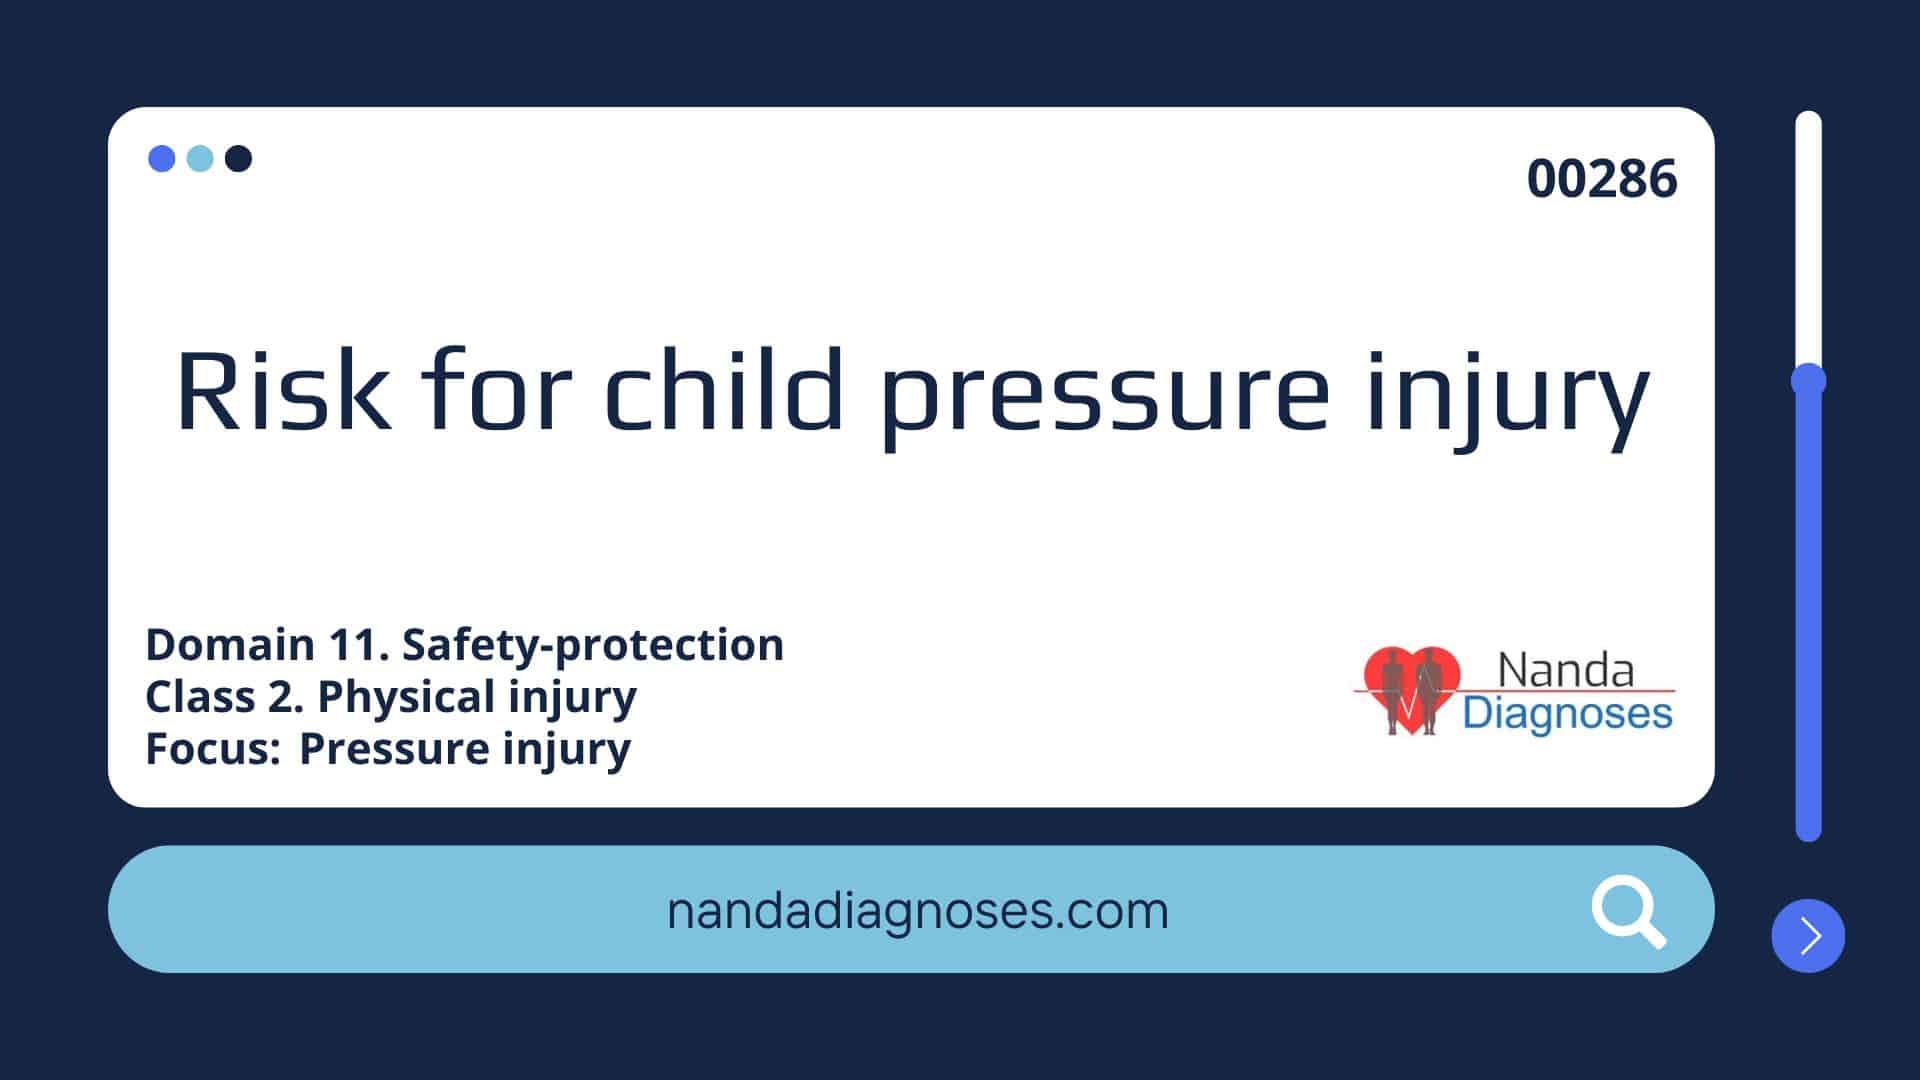 Nursing diagnosis Risk for child pressure injury